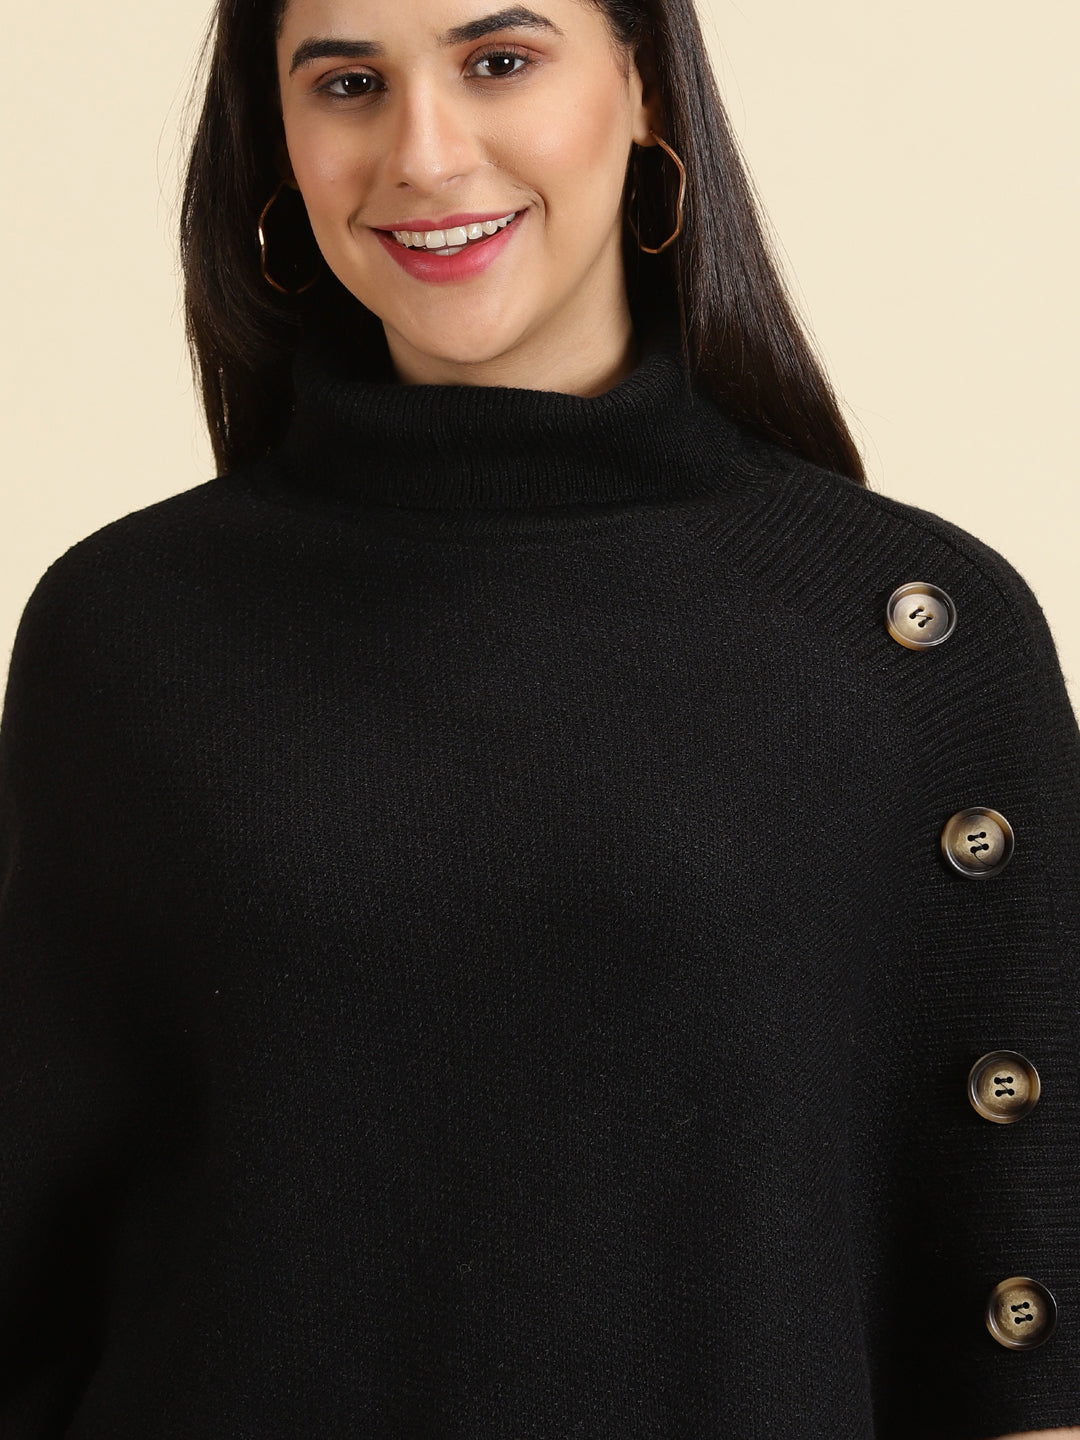 Women's Black Solid Poncho Longline Sweater